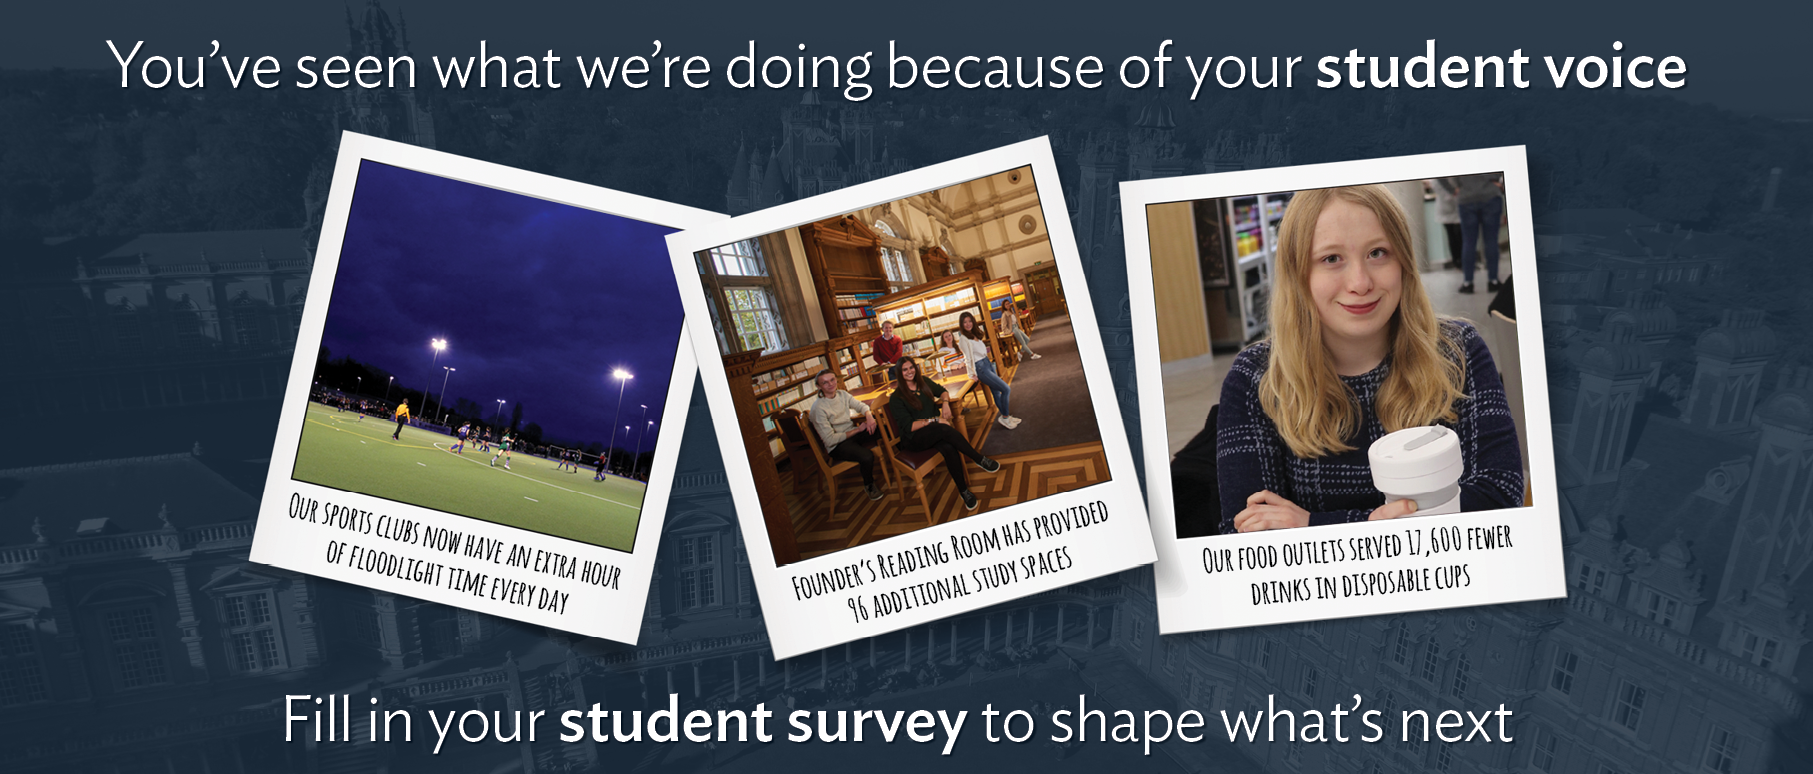 Student Surveys 2019 Royal Holloway Student Intranet - student surveys 2019